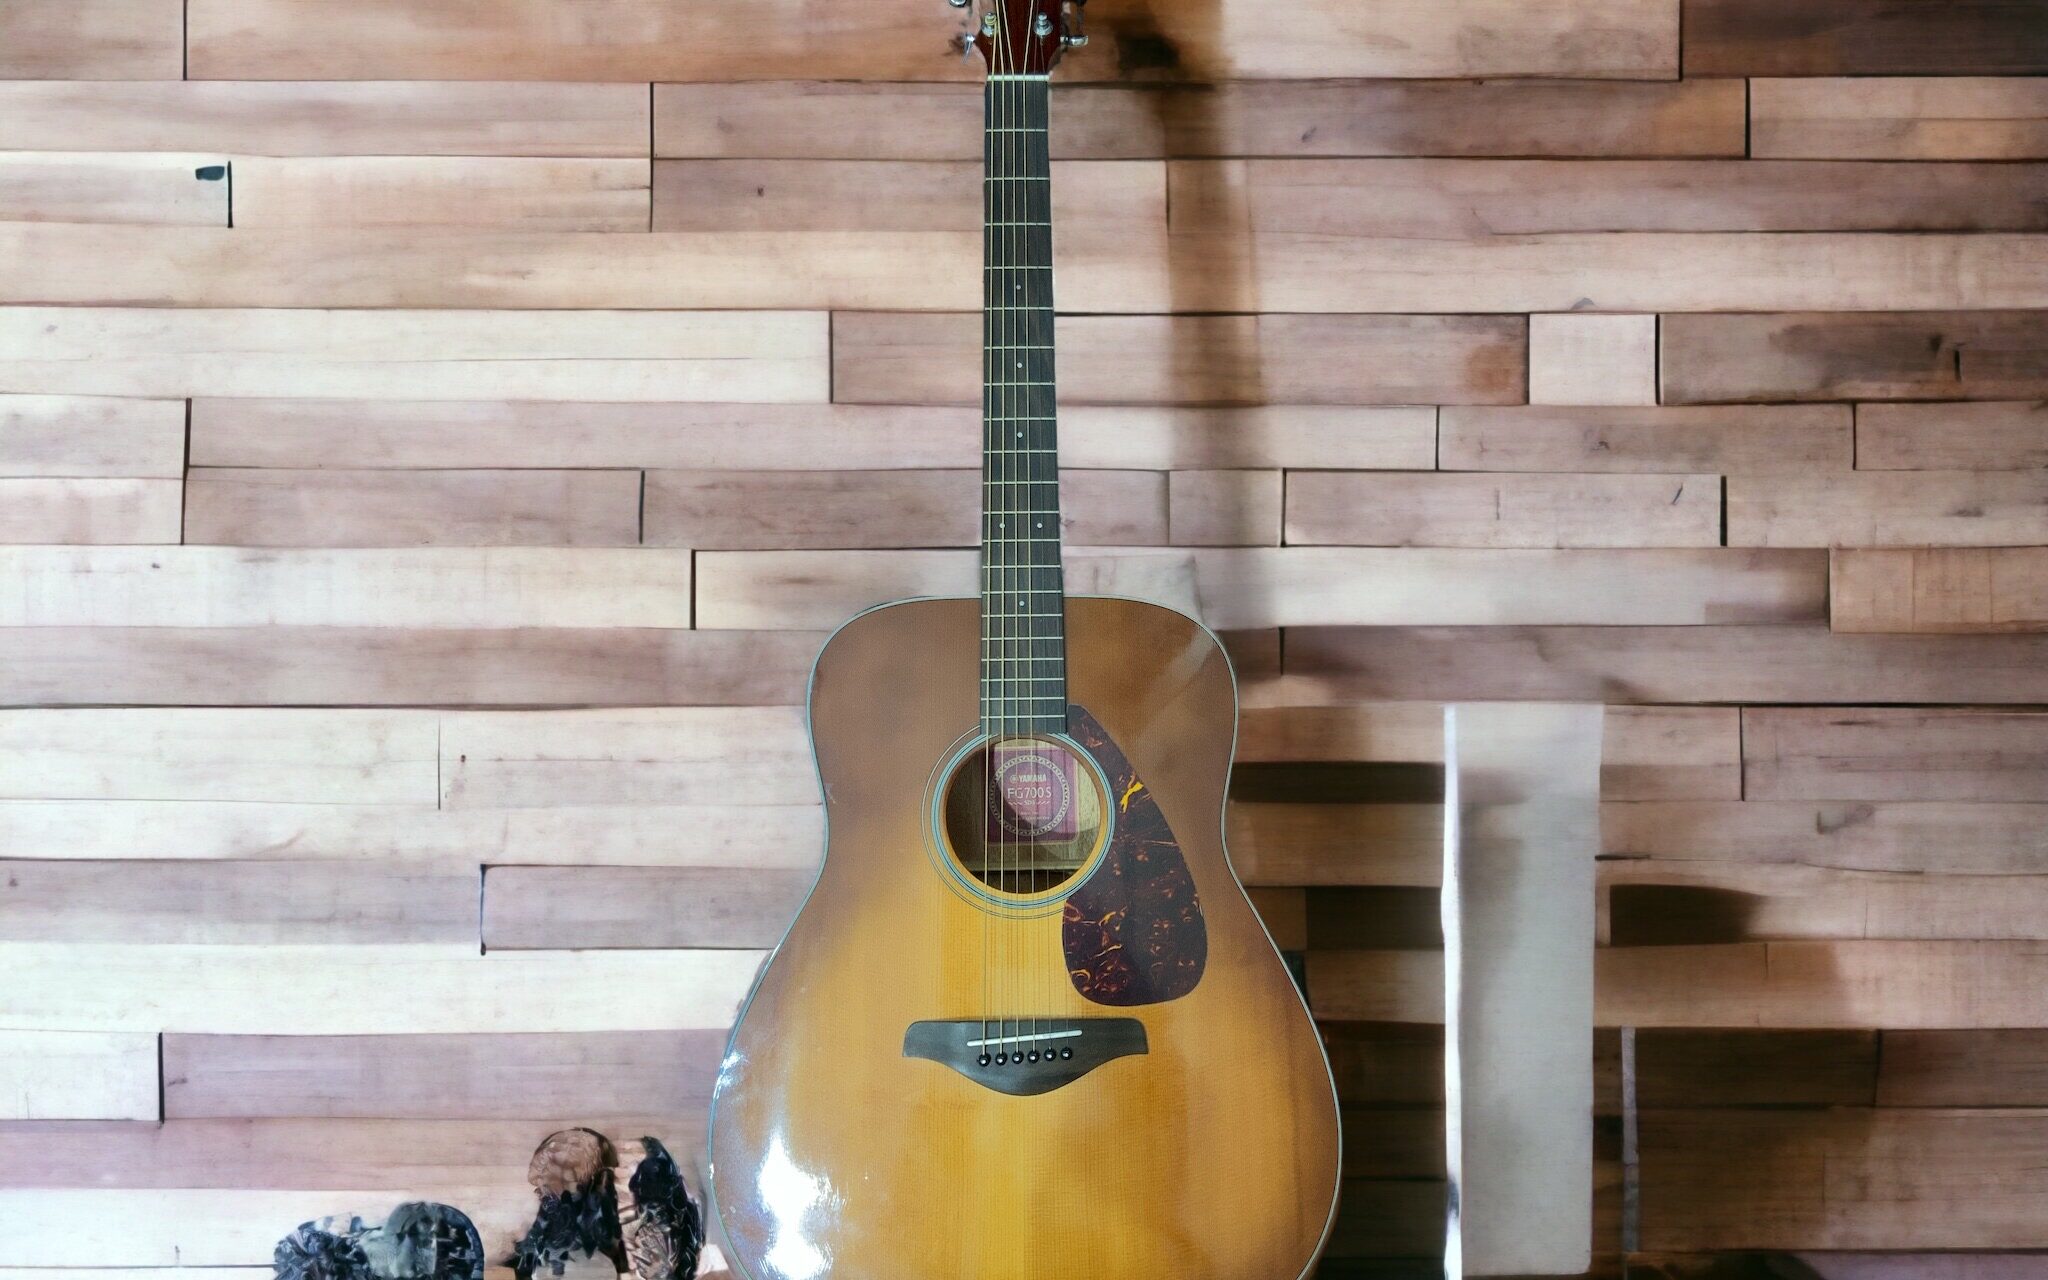 A guitar sitting against a wall.